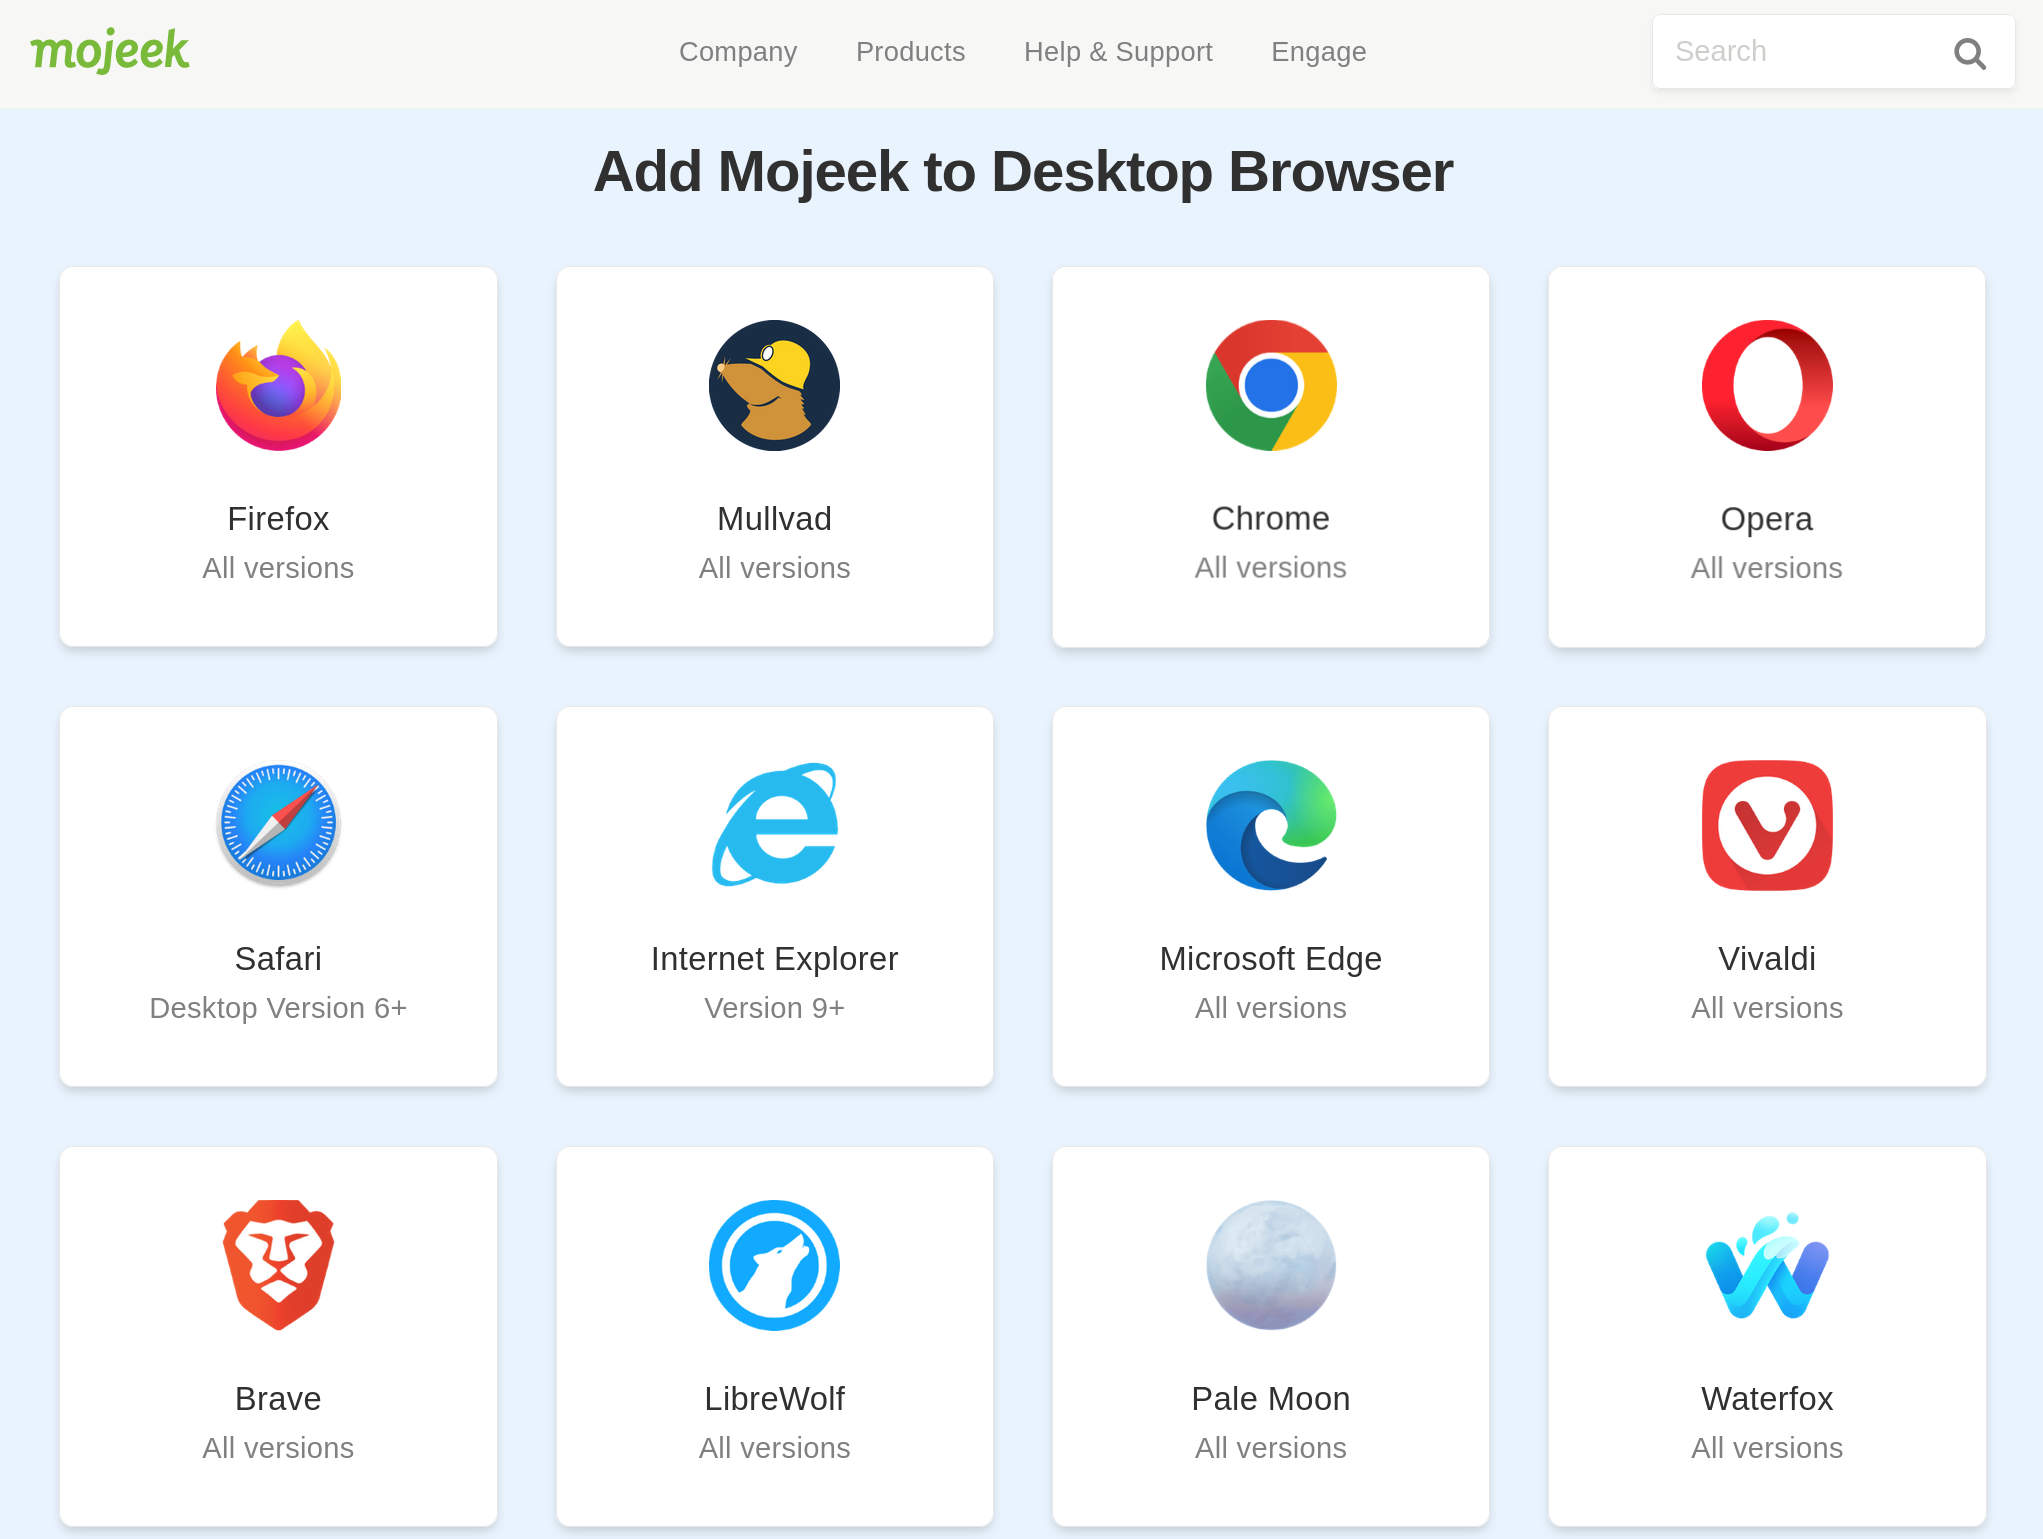 the Add to Browser grid on Mojeek featuring Firefox, Mullvad, Chrome, Opera, Safari, Internet Explorer, Edge, Vivaldi, Brave, Librewolf, Pale Moon, and Waterfox